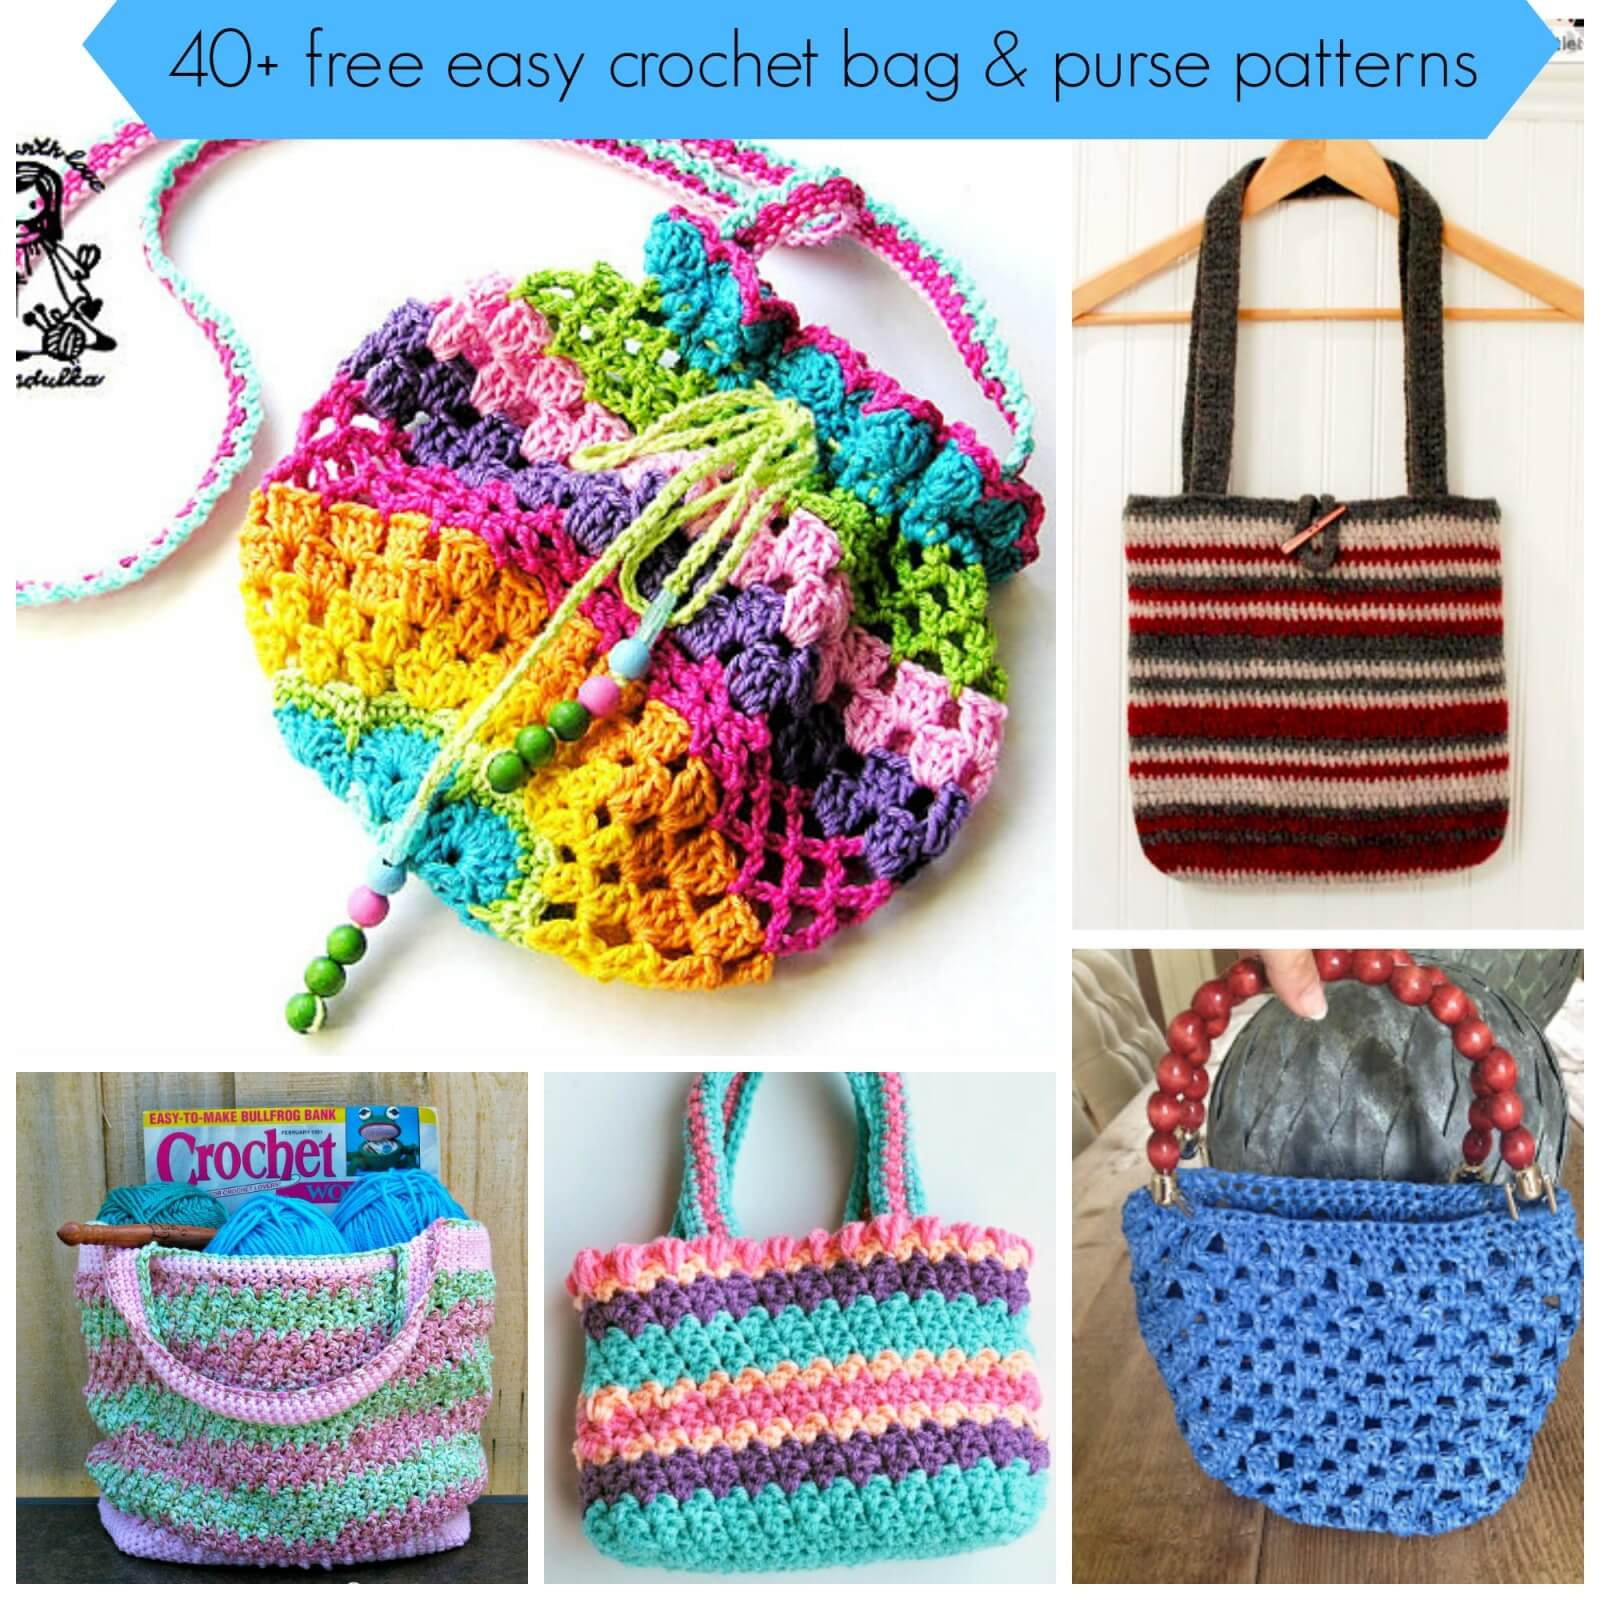 Crochet Purse Patterns 40 Free Easy Crochet Bag Purse Patterns